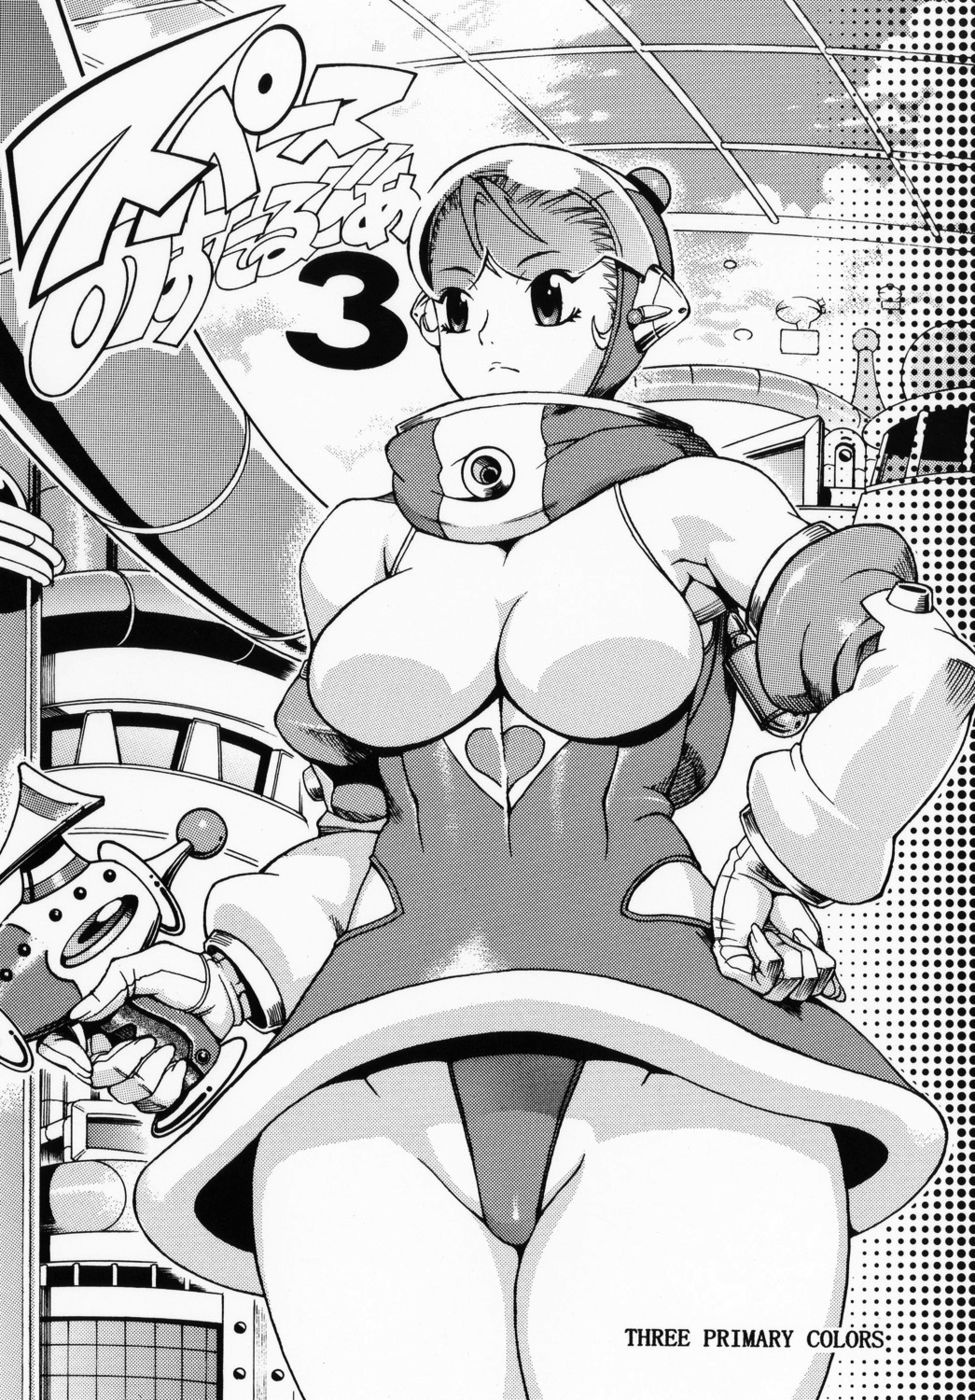 Hentai Manga Comic-Space Nostalgia-v22m-Chapter 3-No Food-No Life-1